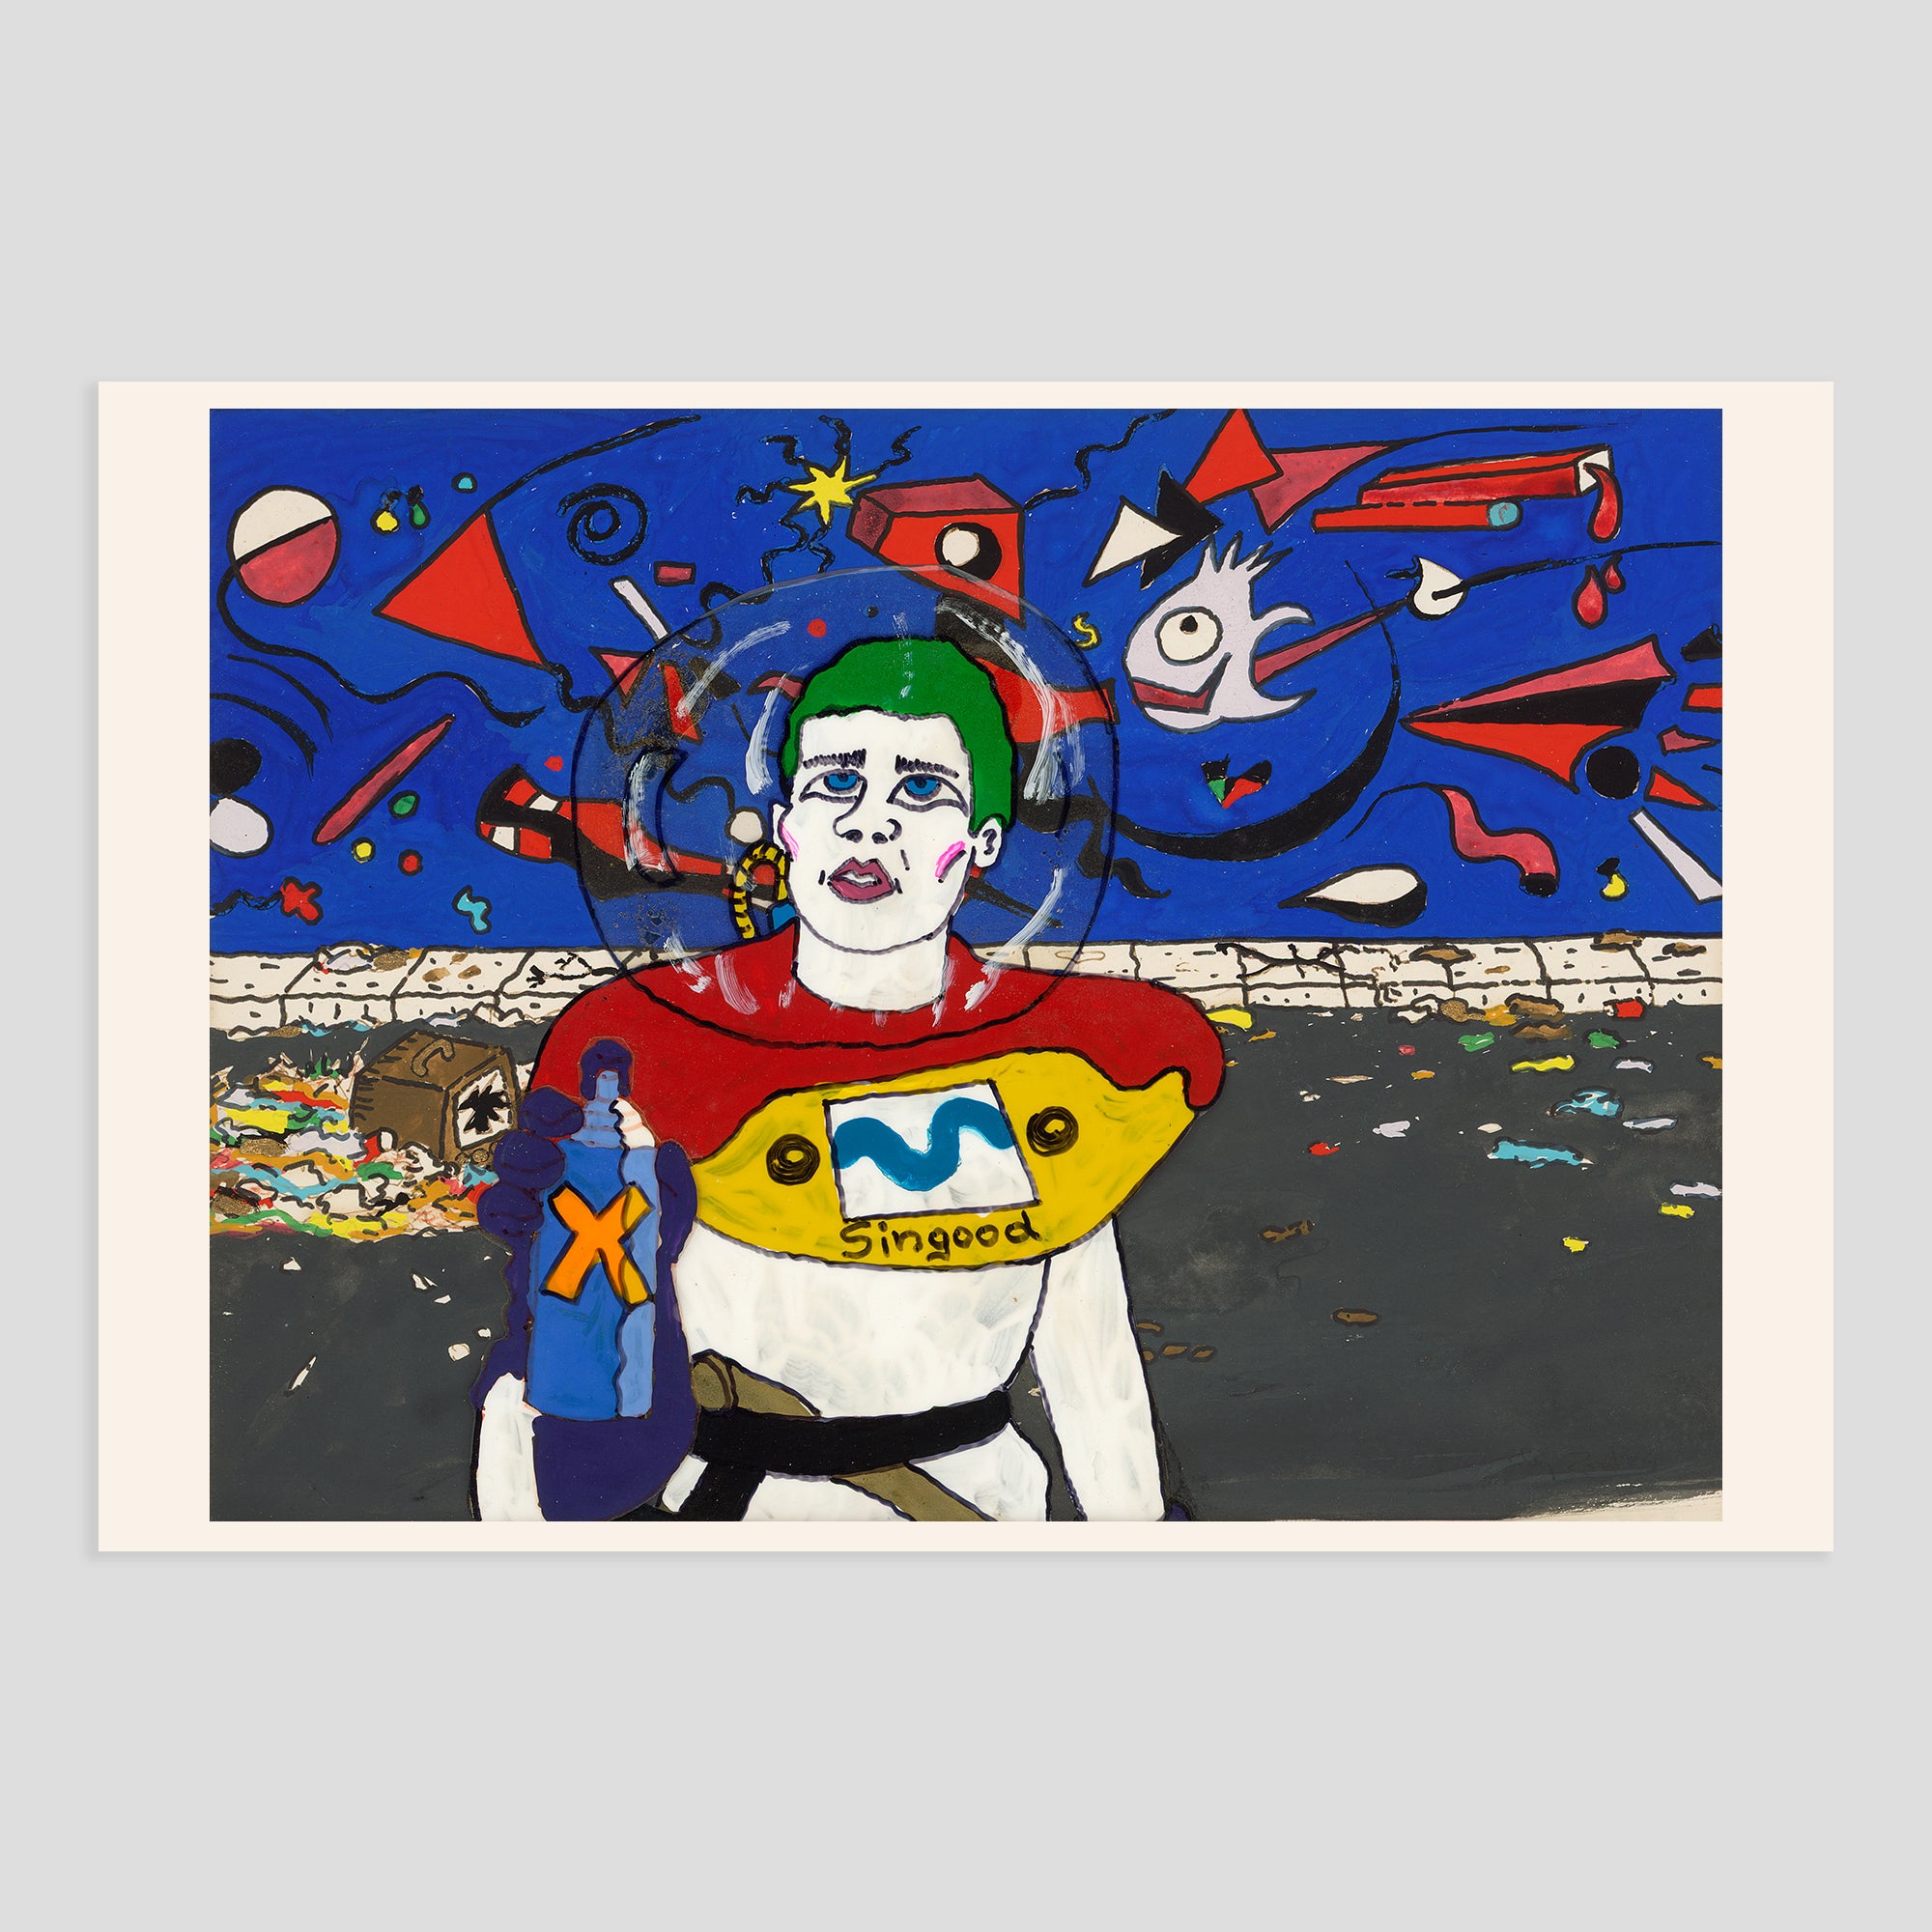 TOBY ZOATES 'SINGOOD THE GRAFITI ARTIST' 1984 - PRINT